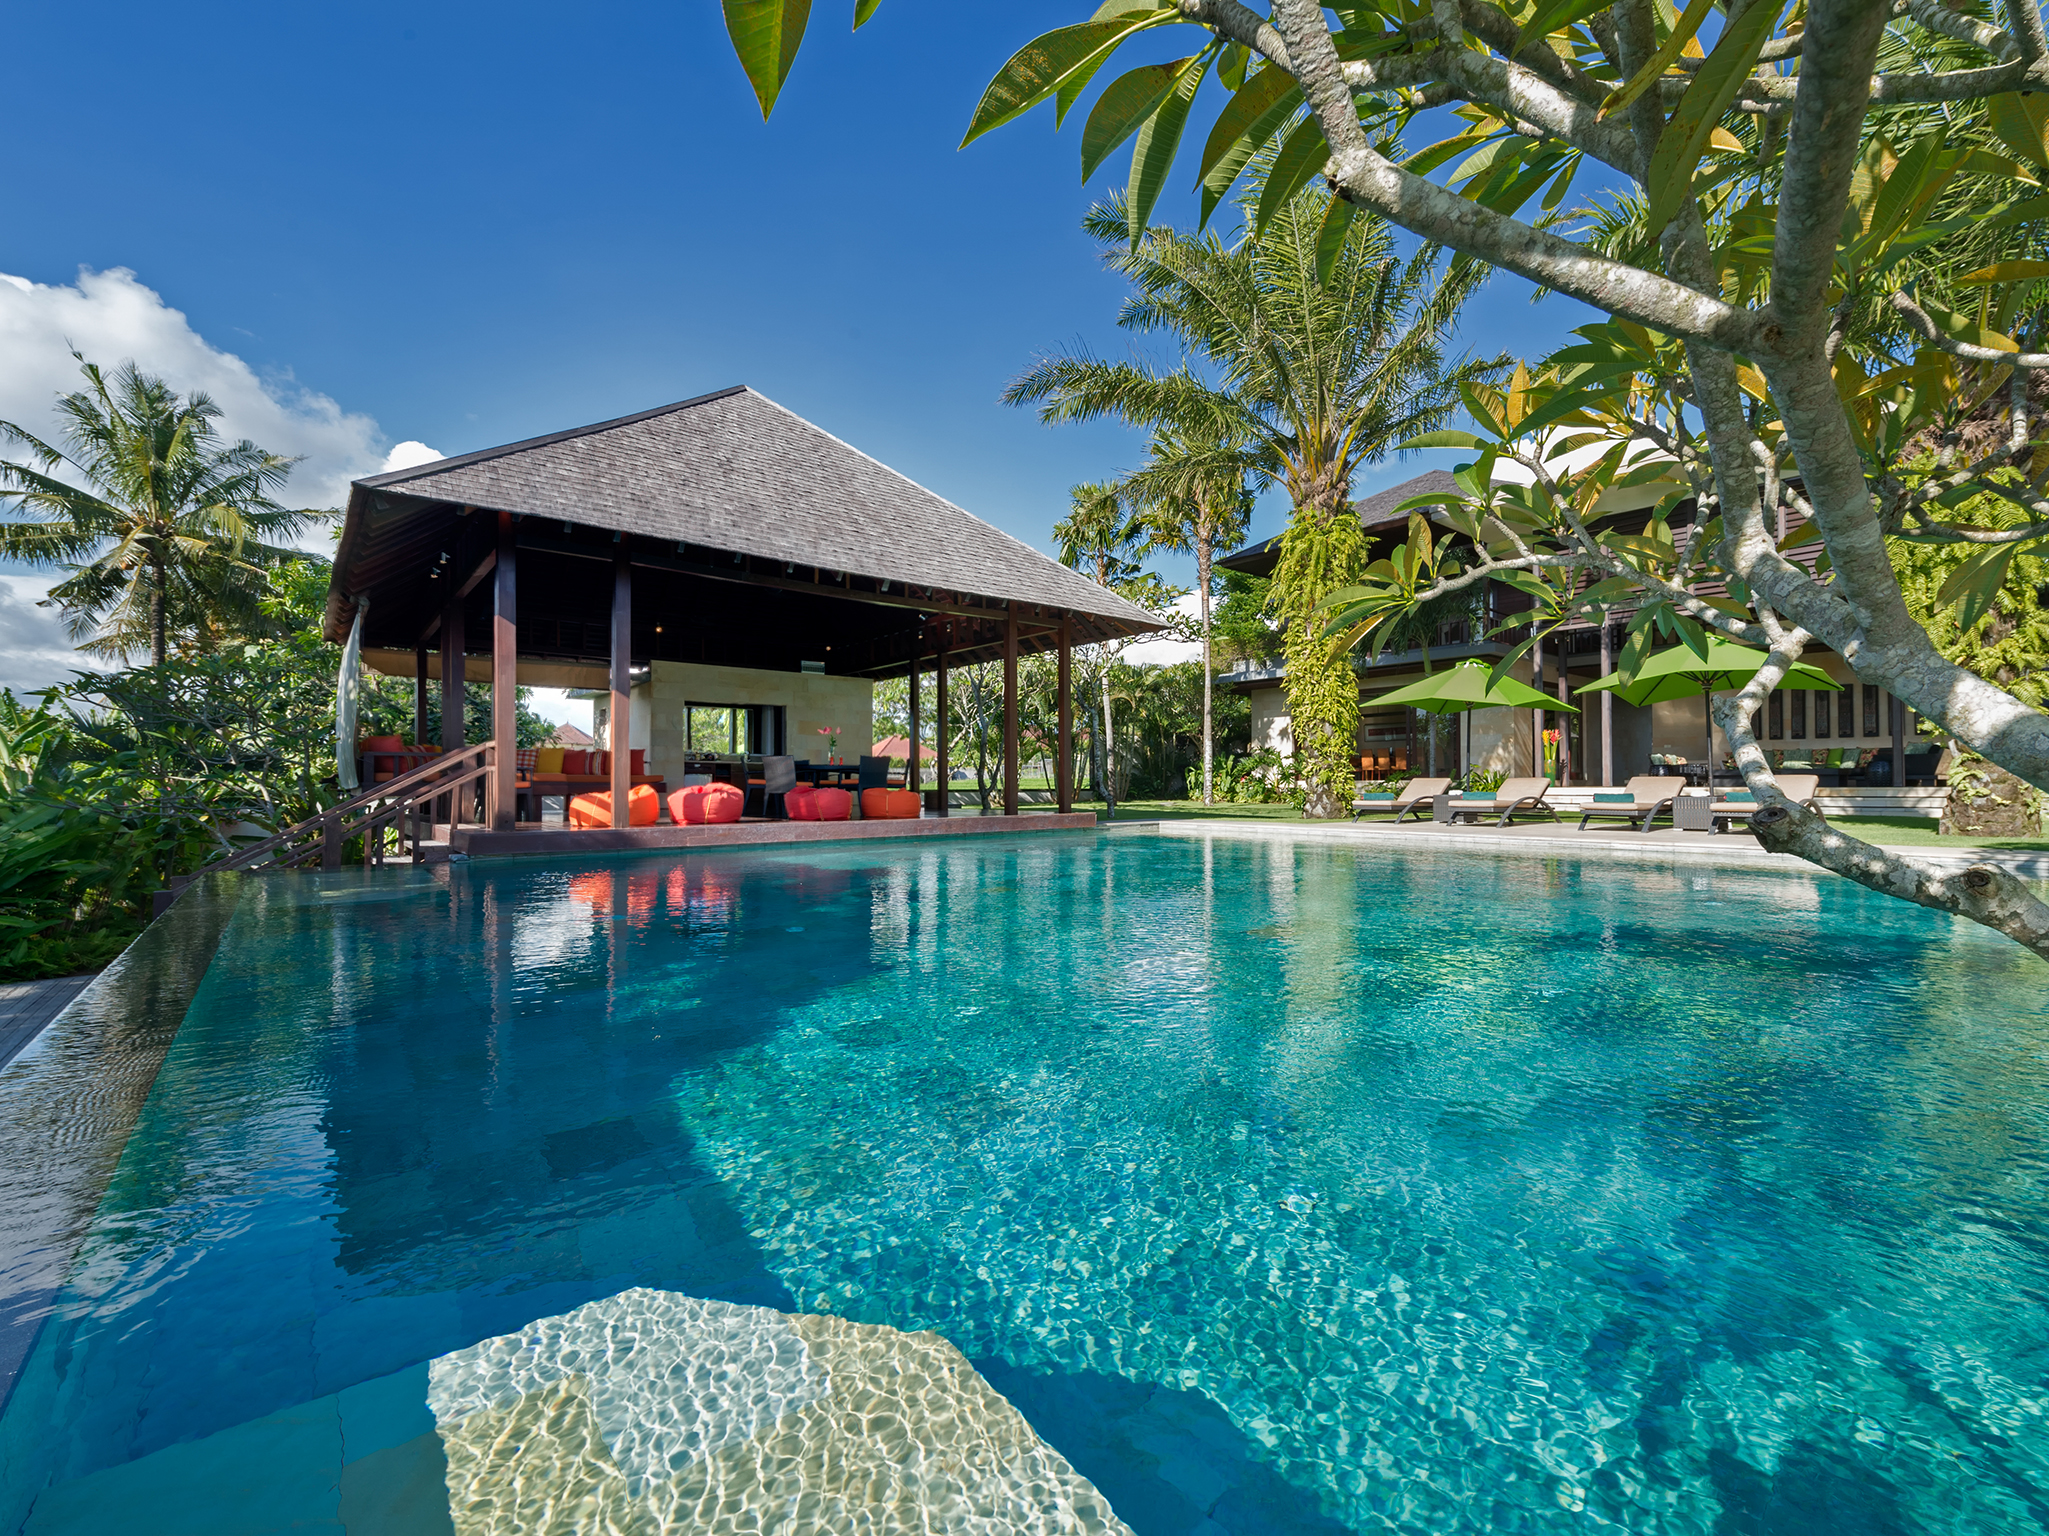 Bendega Nui - Pool view to outdoor to outdoor living bale - Bendega Nui, Canggu, Bali